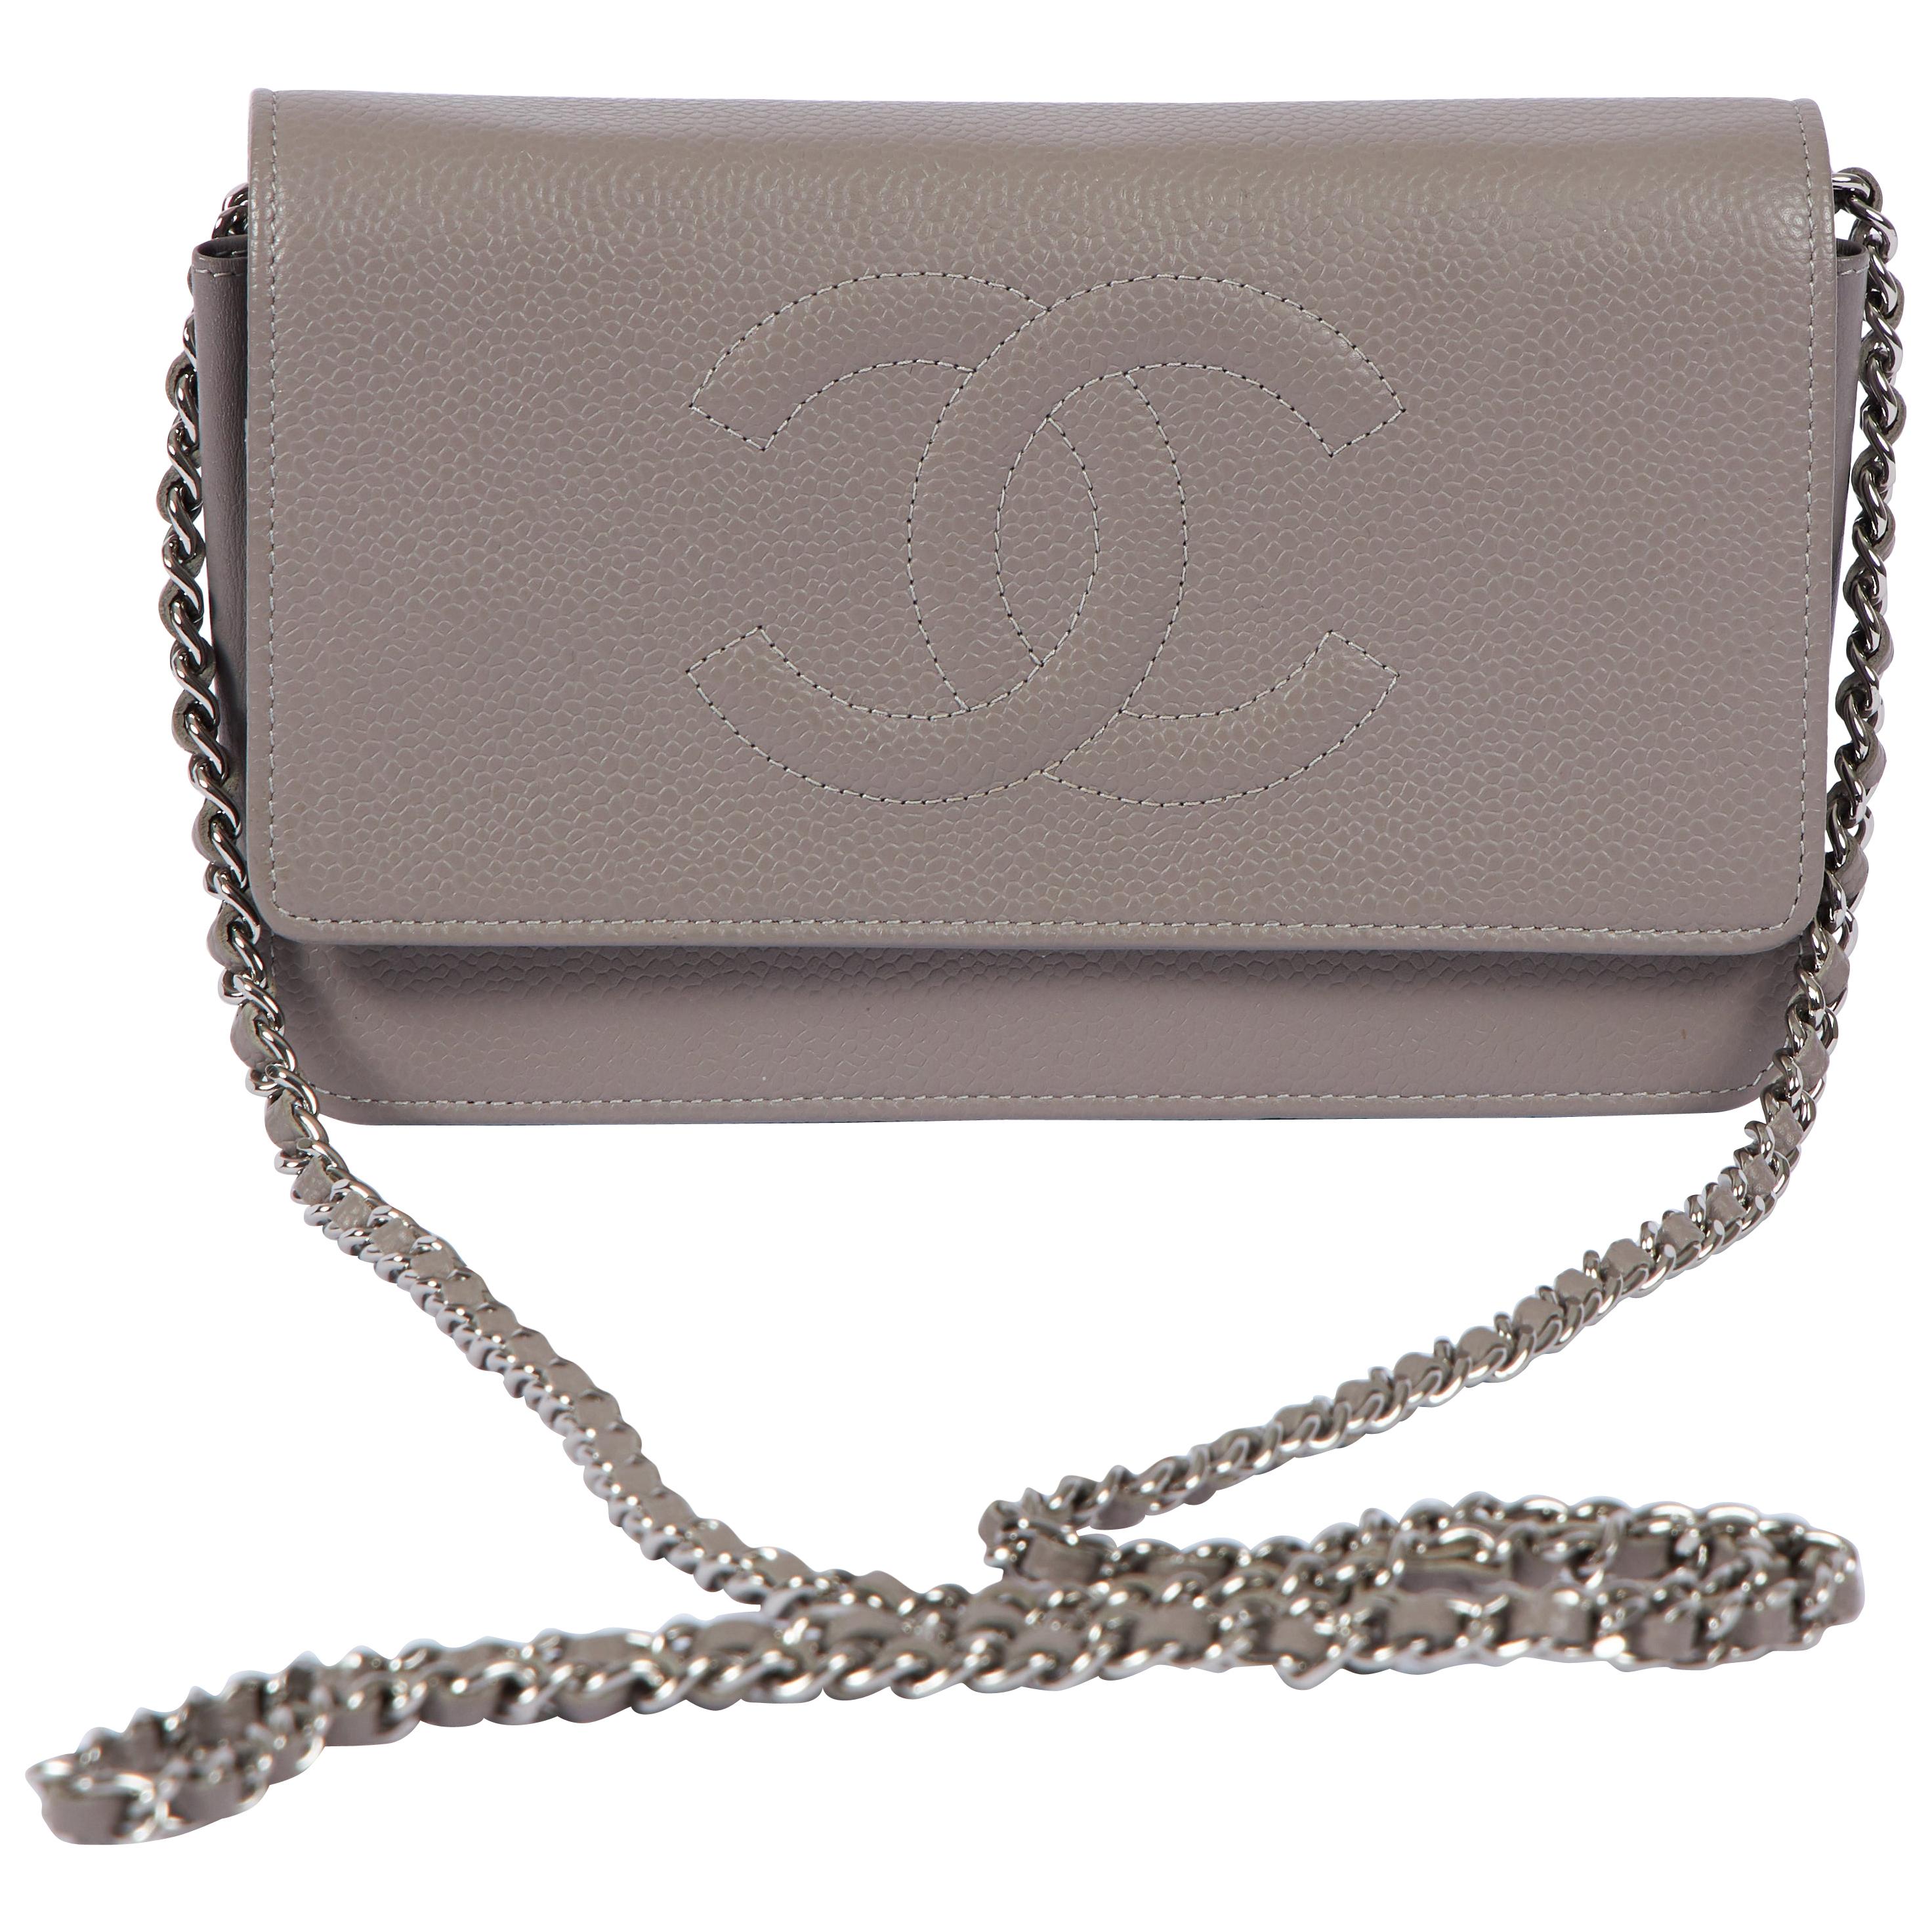 New in Box Chanel Etoupe Caviar Woc Crossbody Bag